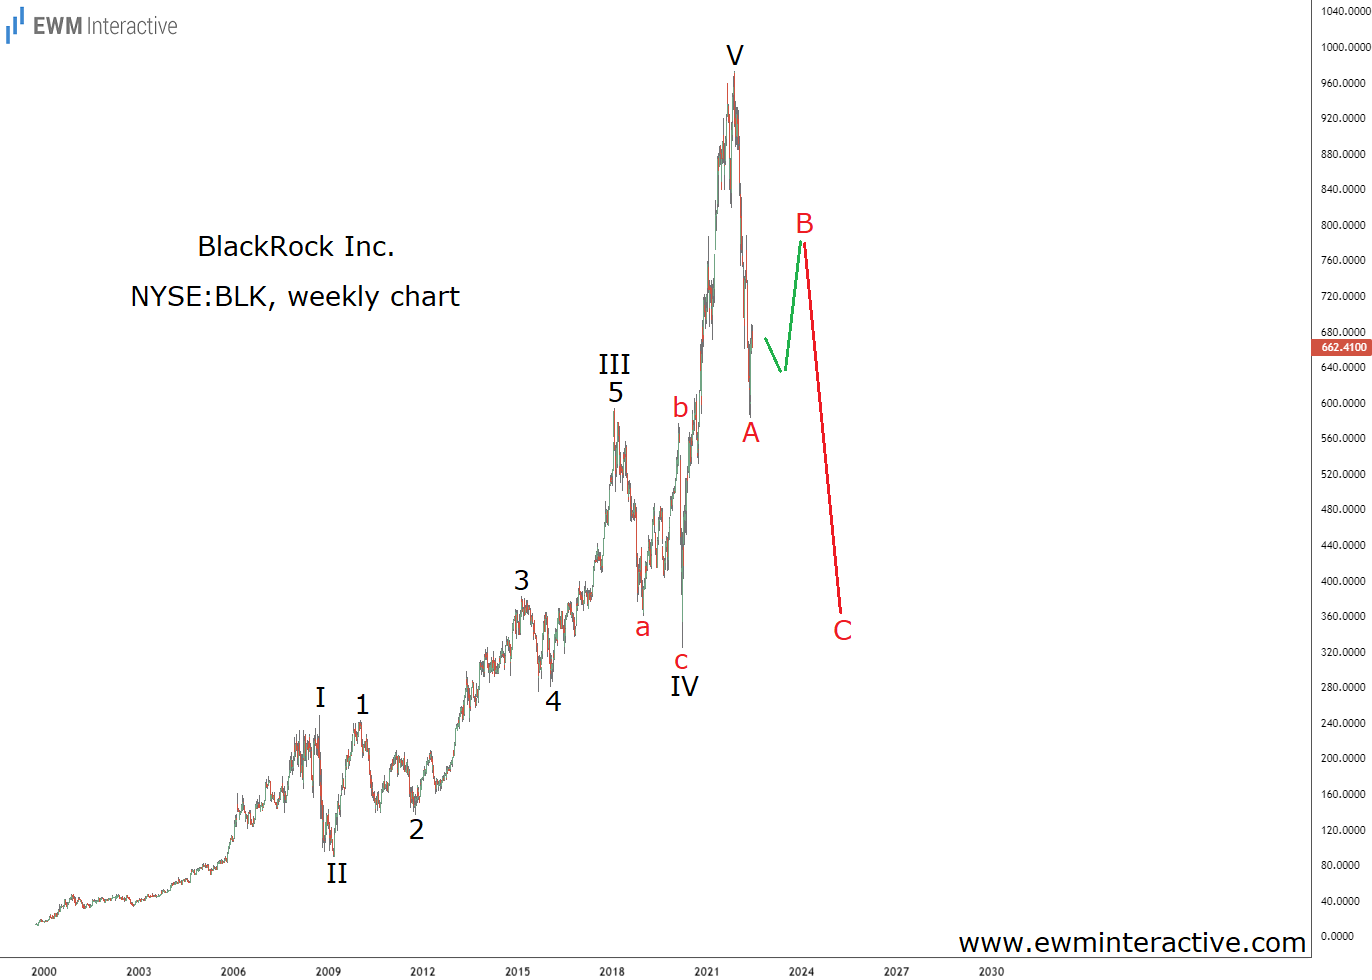 BlackRock Inc., Stock Weekly Chart